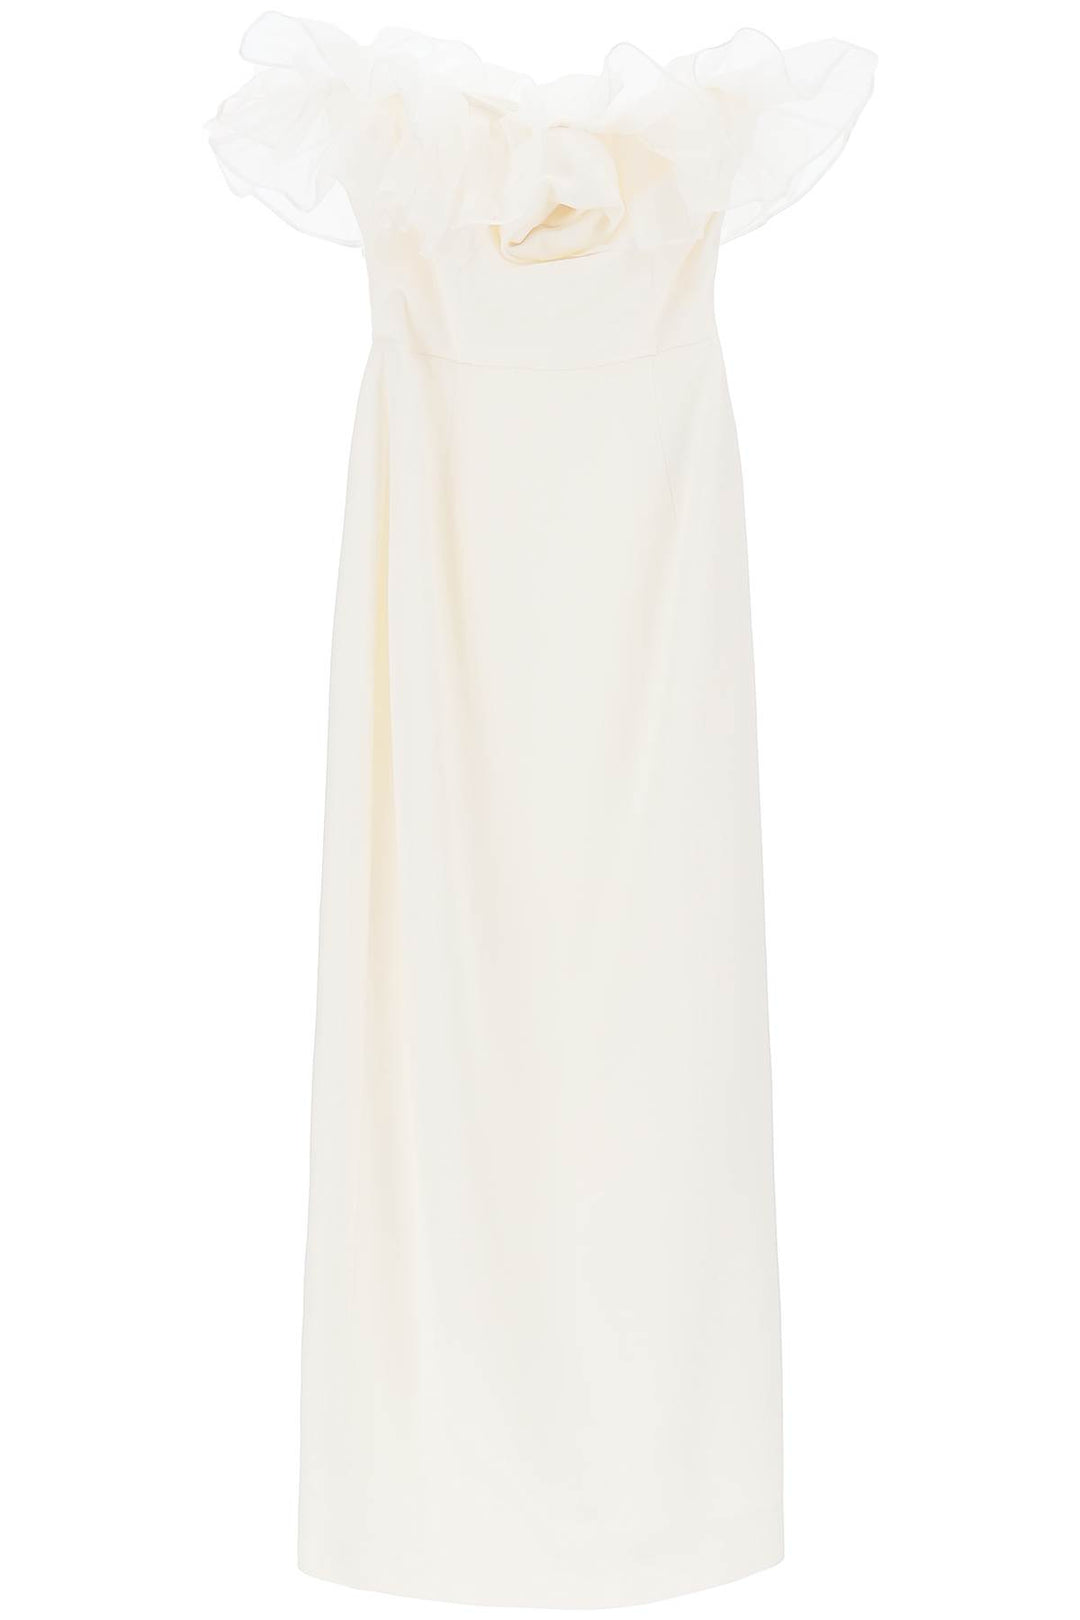 Alessandra Rich Strapless Dress With Organza Details   Bianco